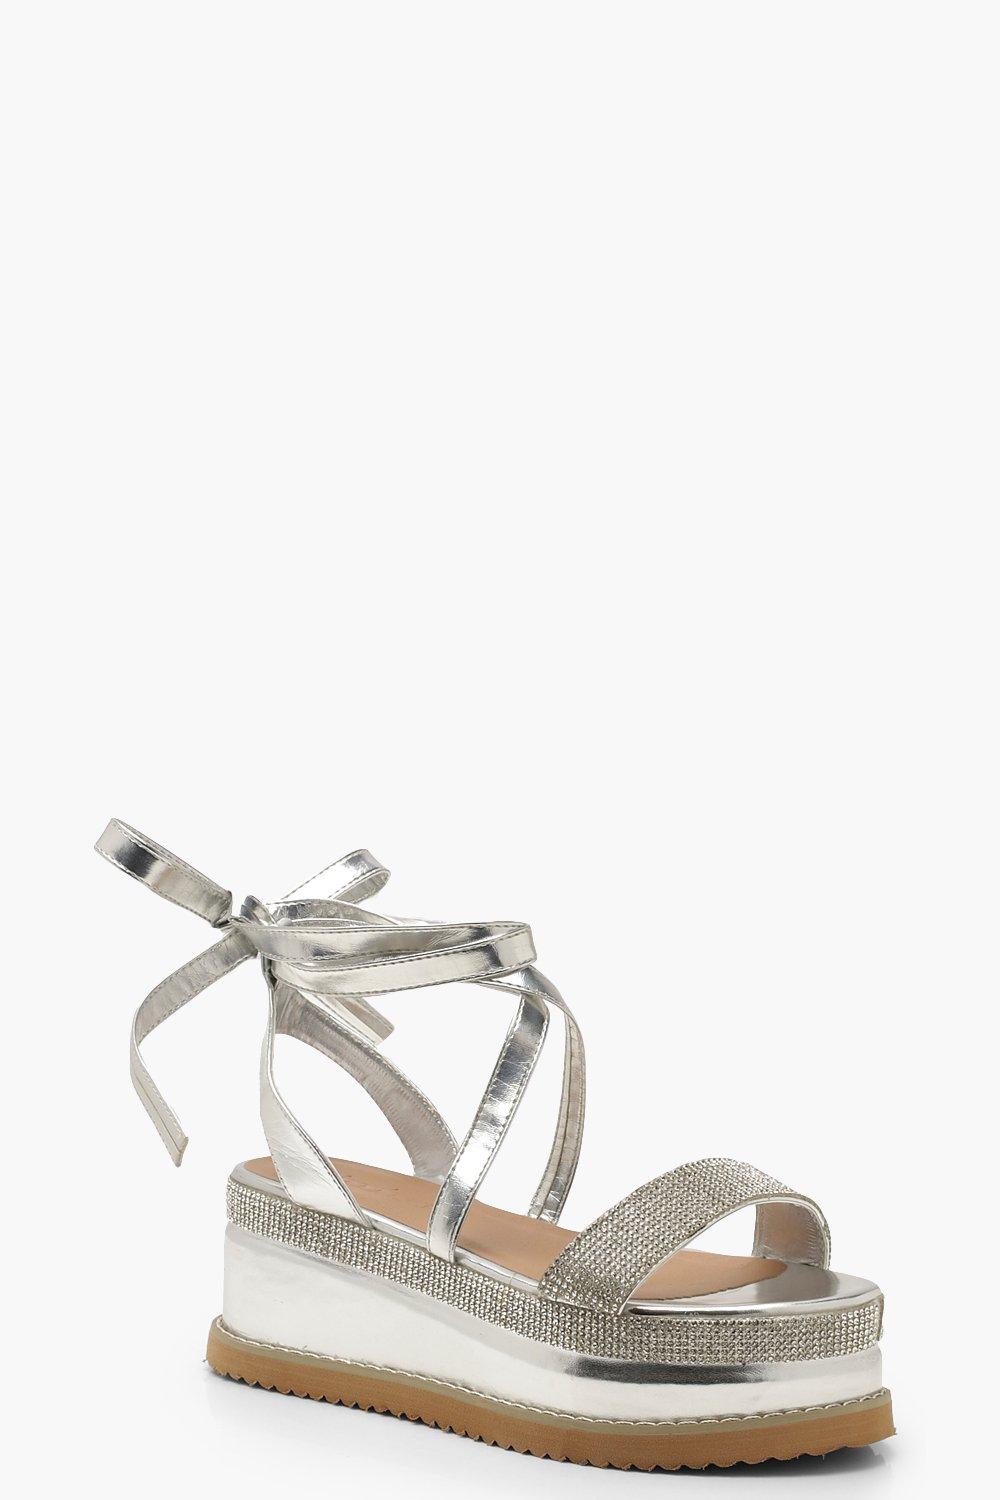 flatform sandals silver